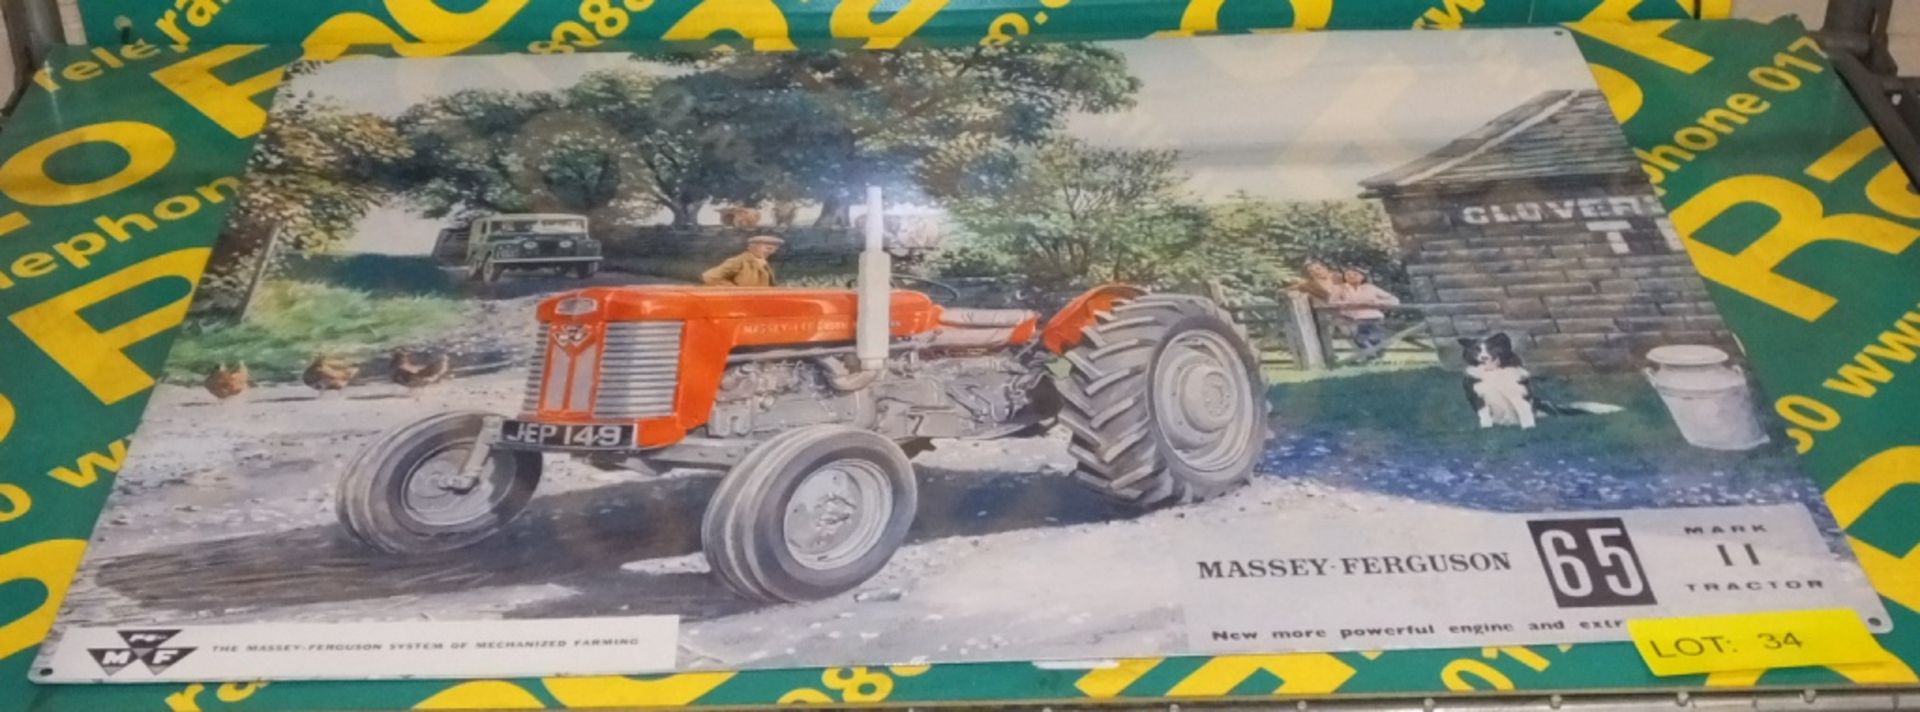 Tin plate sign - Massey Ferguson 65 Mk ii